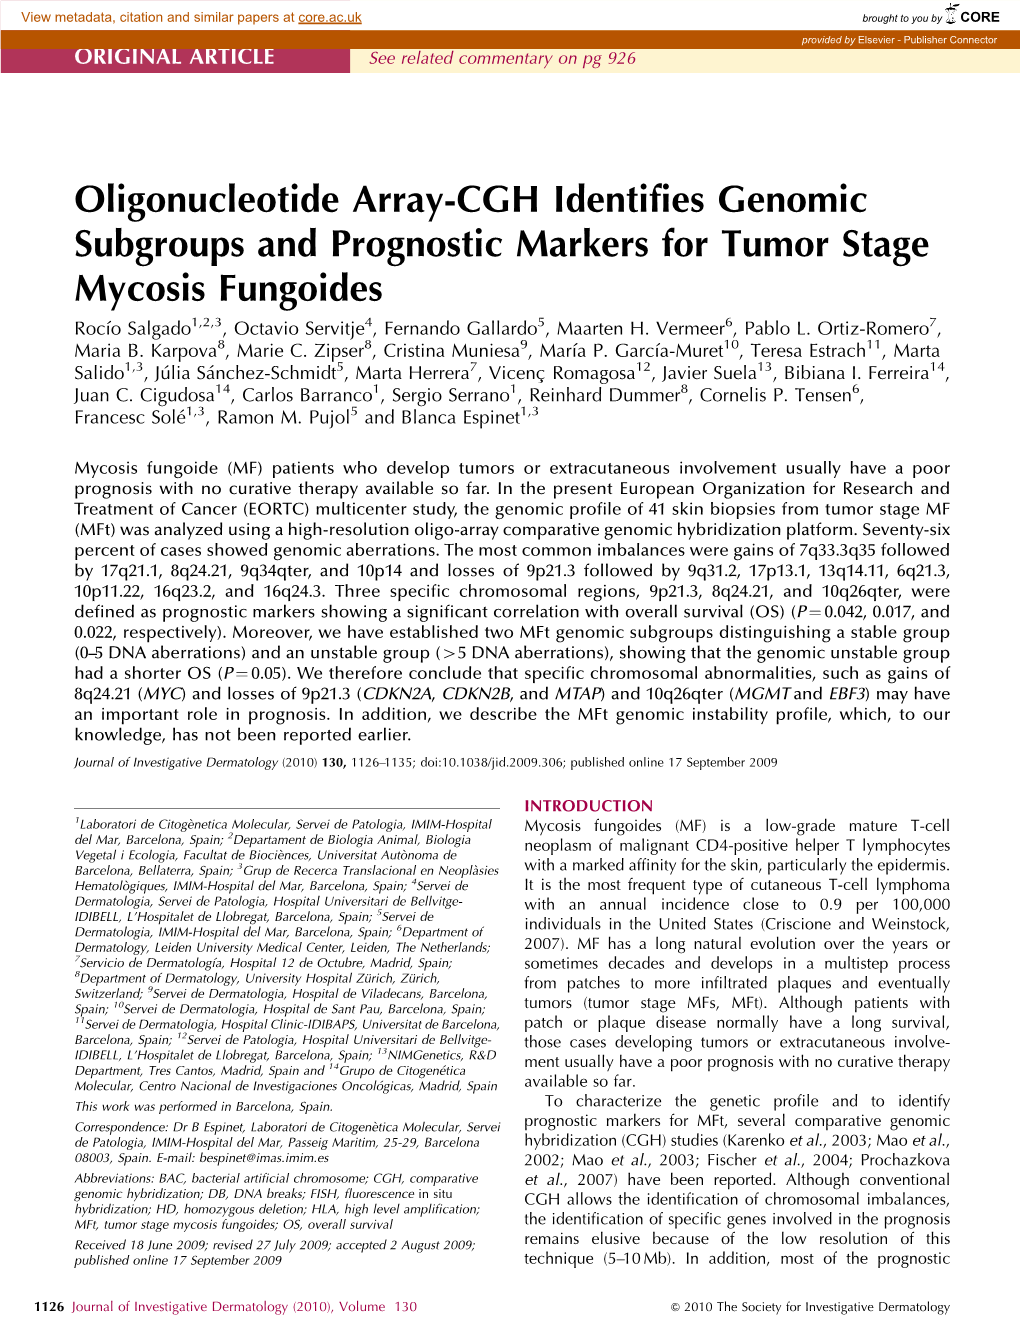 Oligonucleotide Array-CGH Identifies Genomic Subgroups And